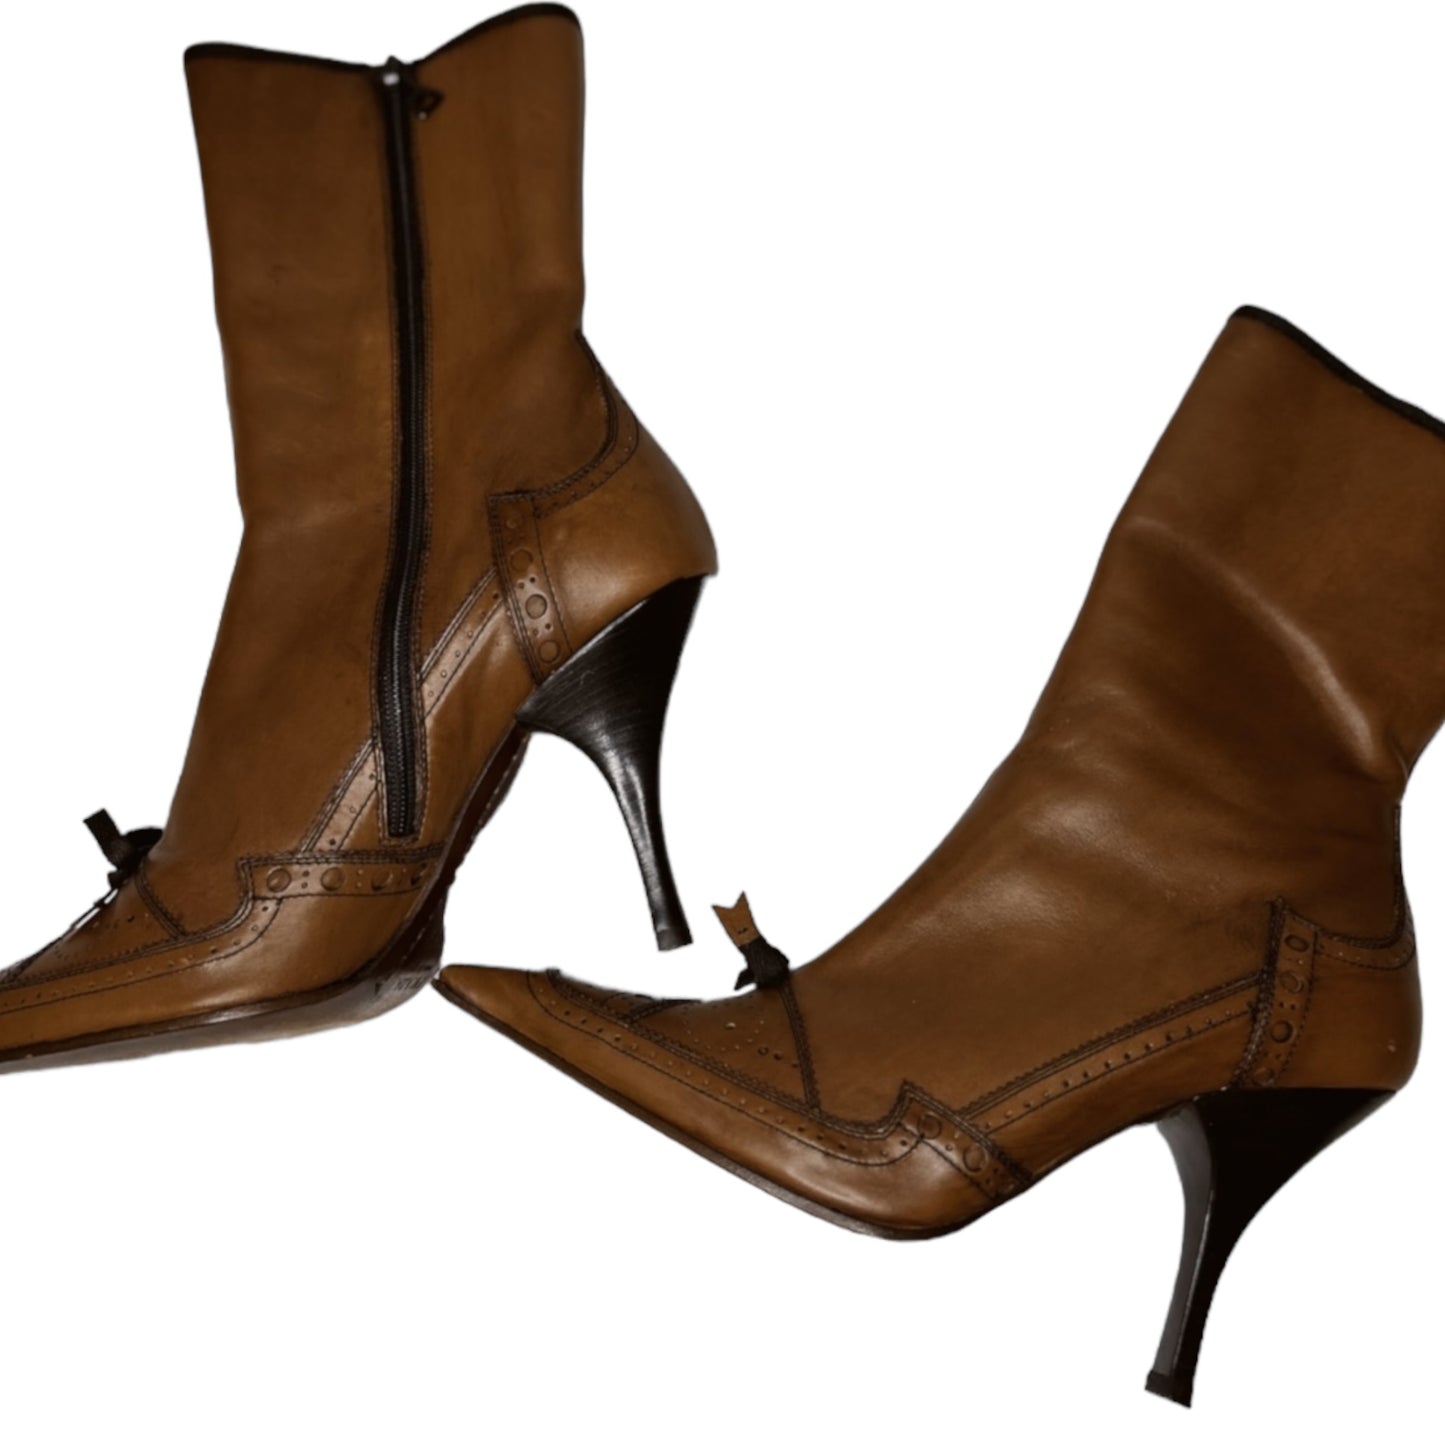 Vintage Prada brown bow tie boots